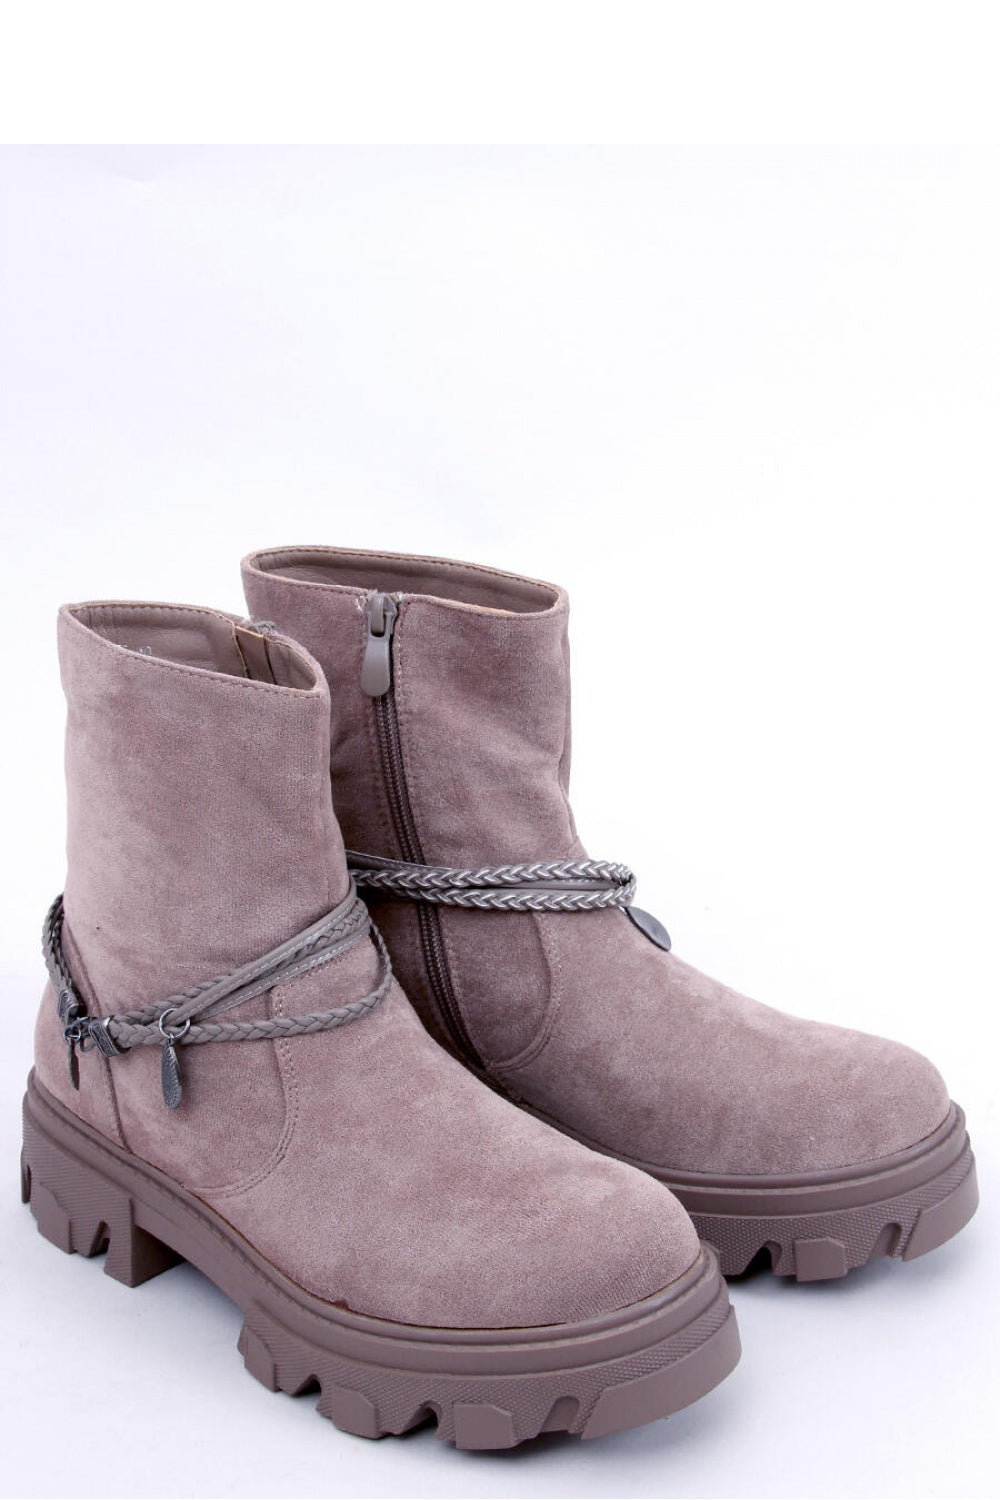 Boots model 171501 Inello Posh Styles Apparel